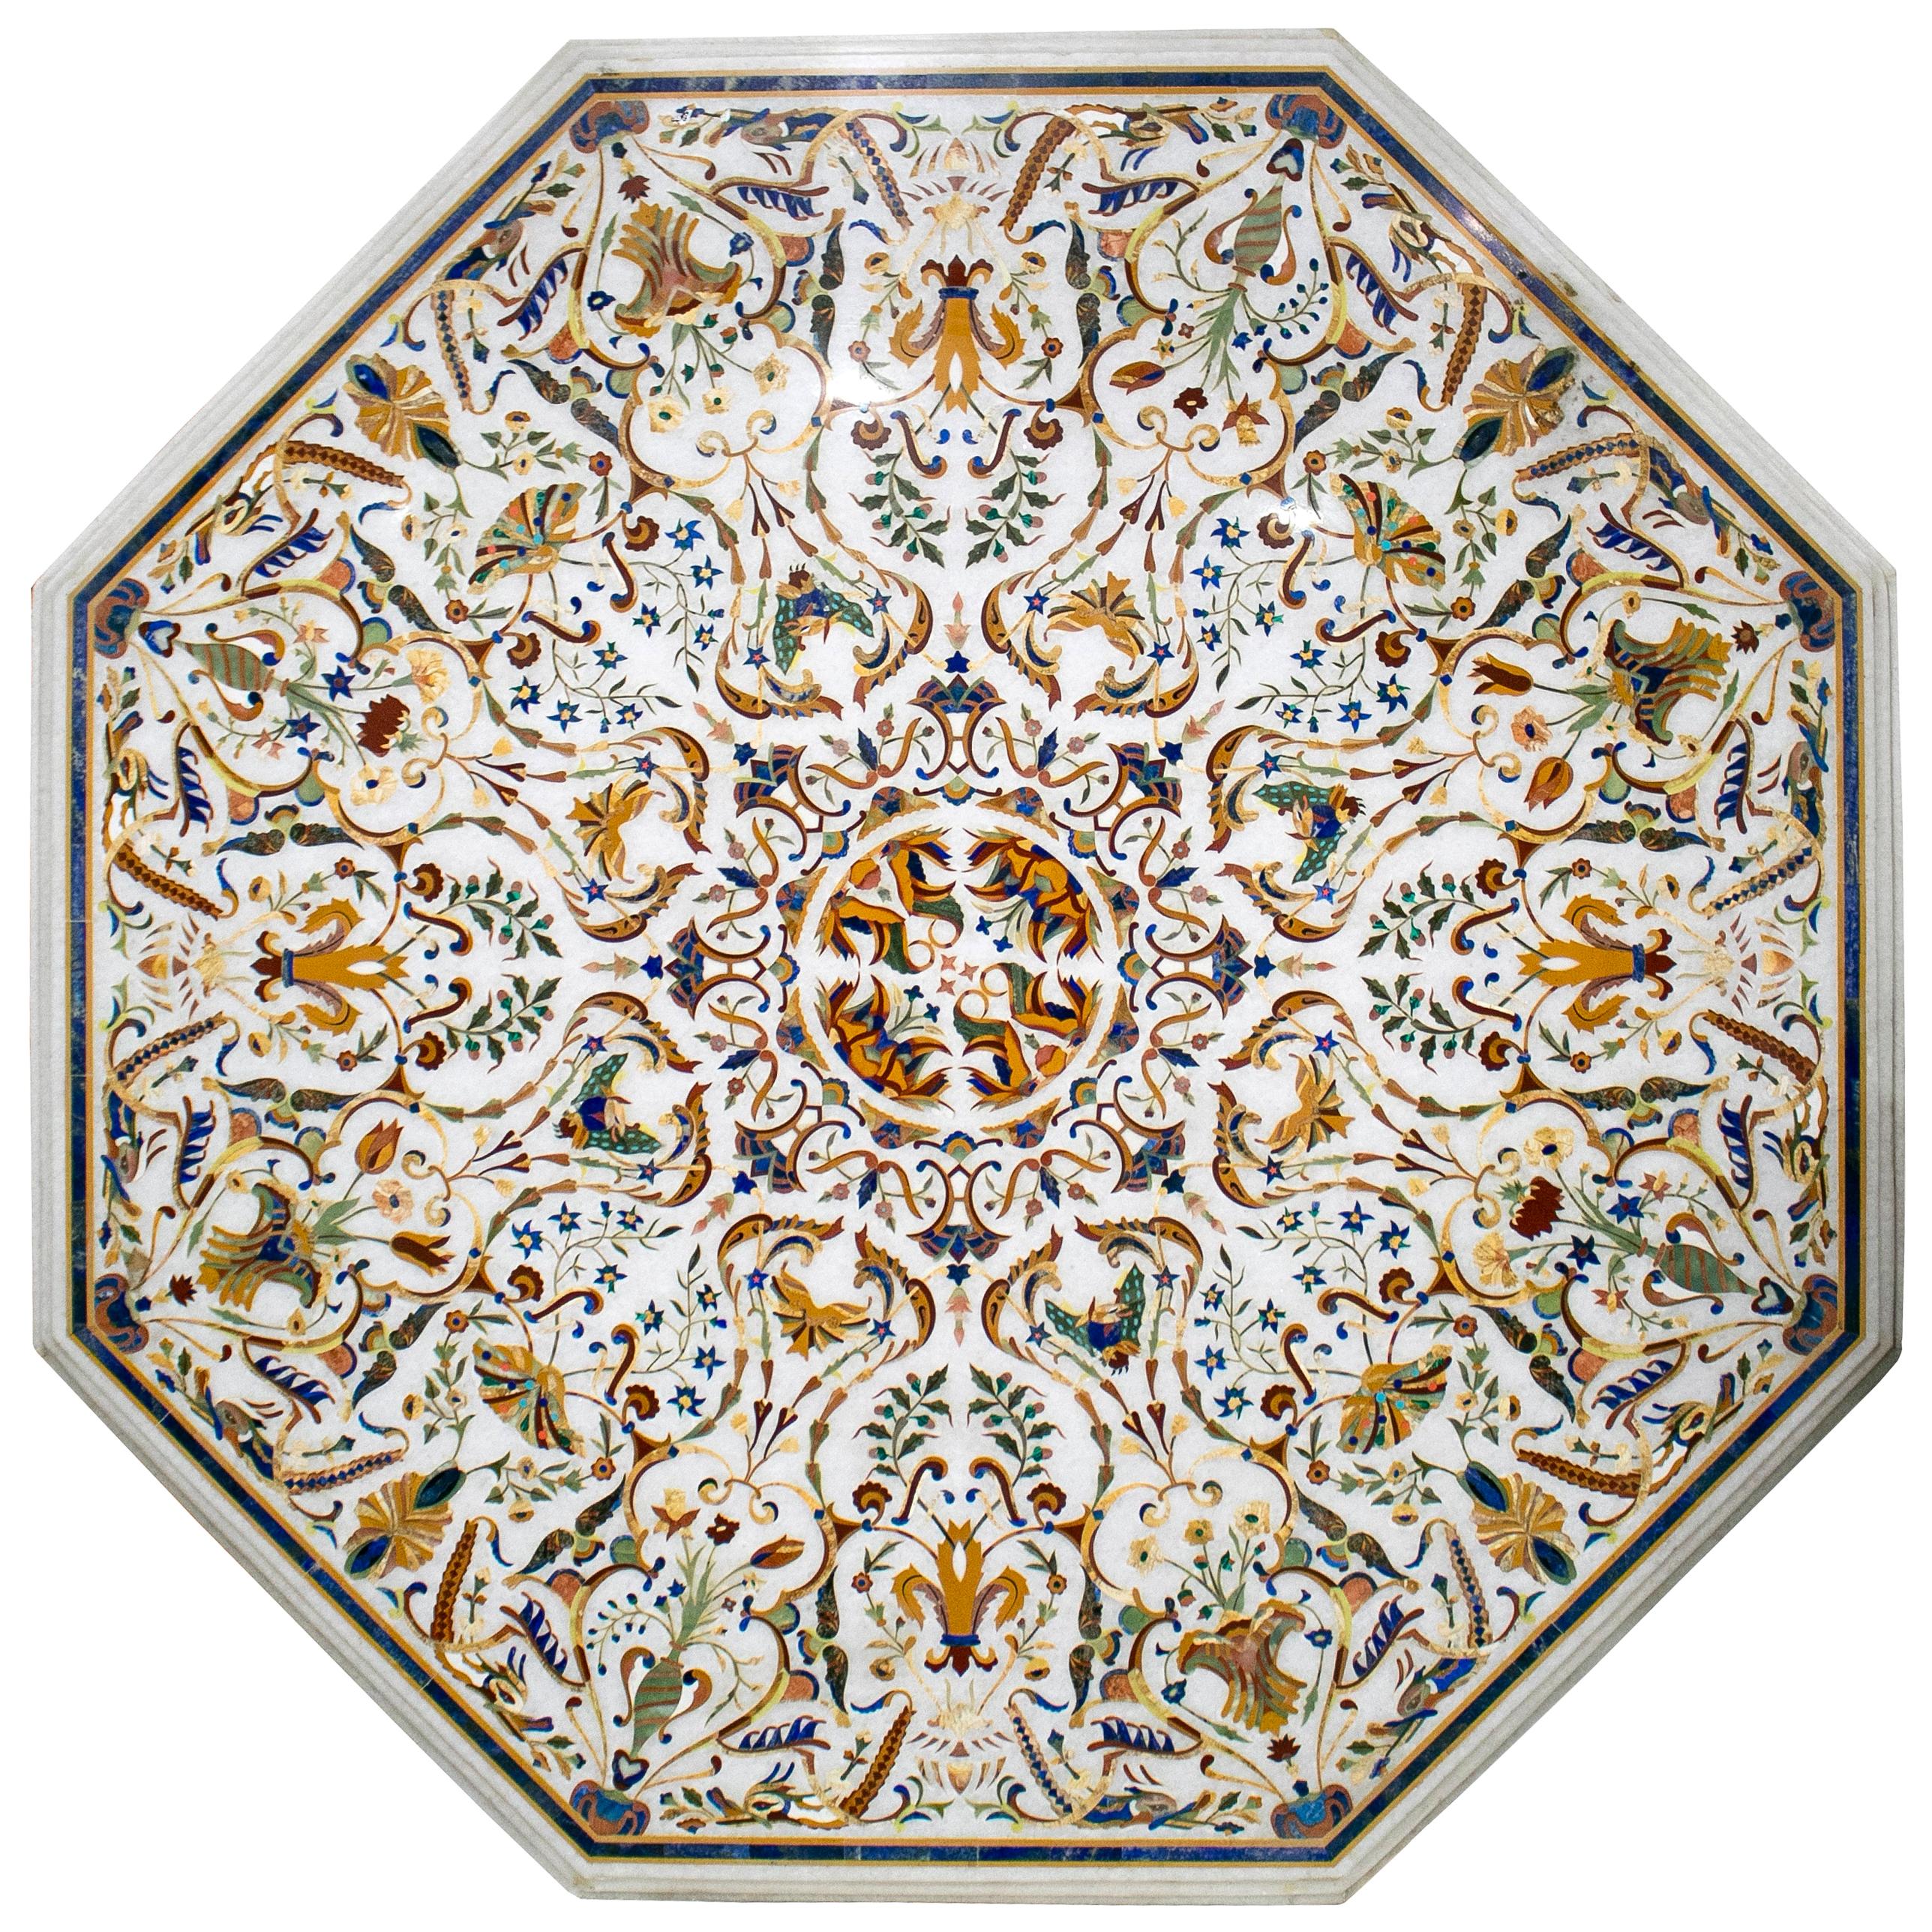 Octagonal Italian Pietre Dure Mosaic Inlay Carrara White Marble Table Top